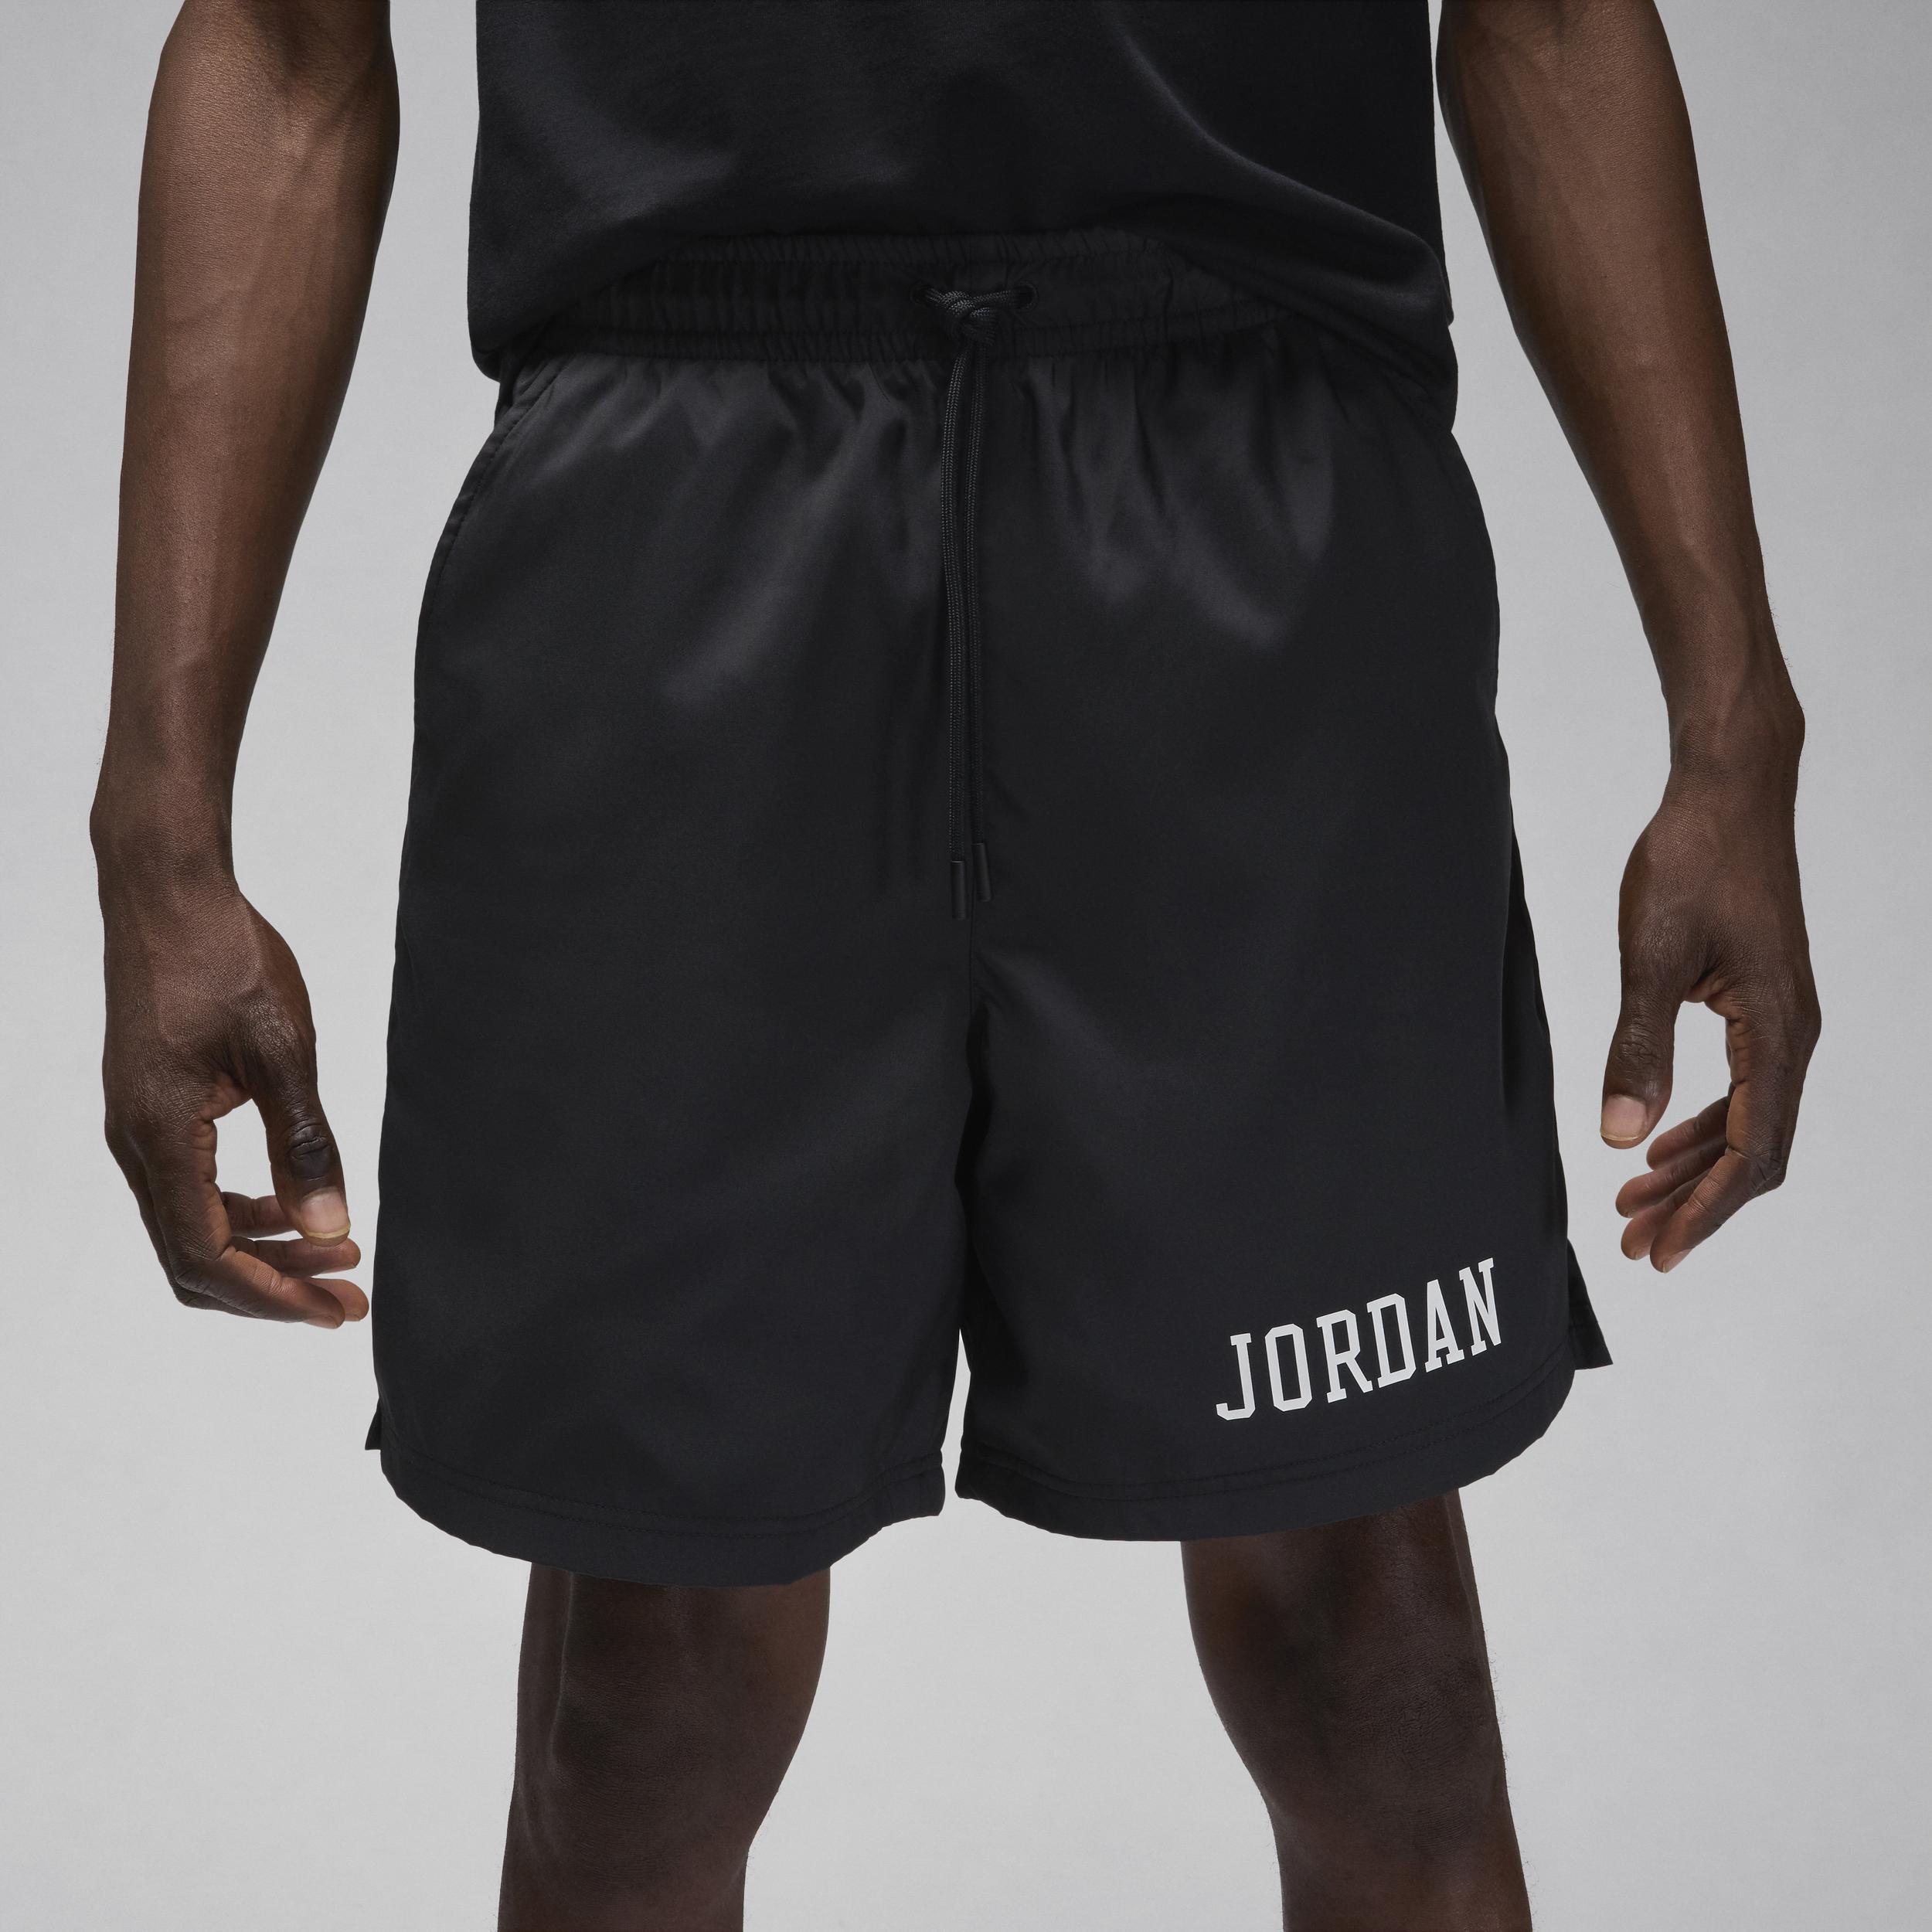 Men's Jordan Essentials Poolside Shorts Product Image